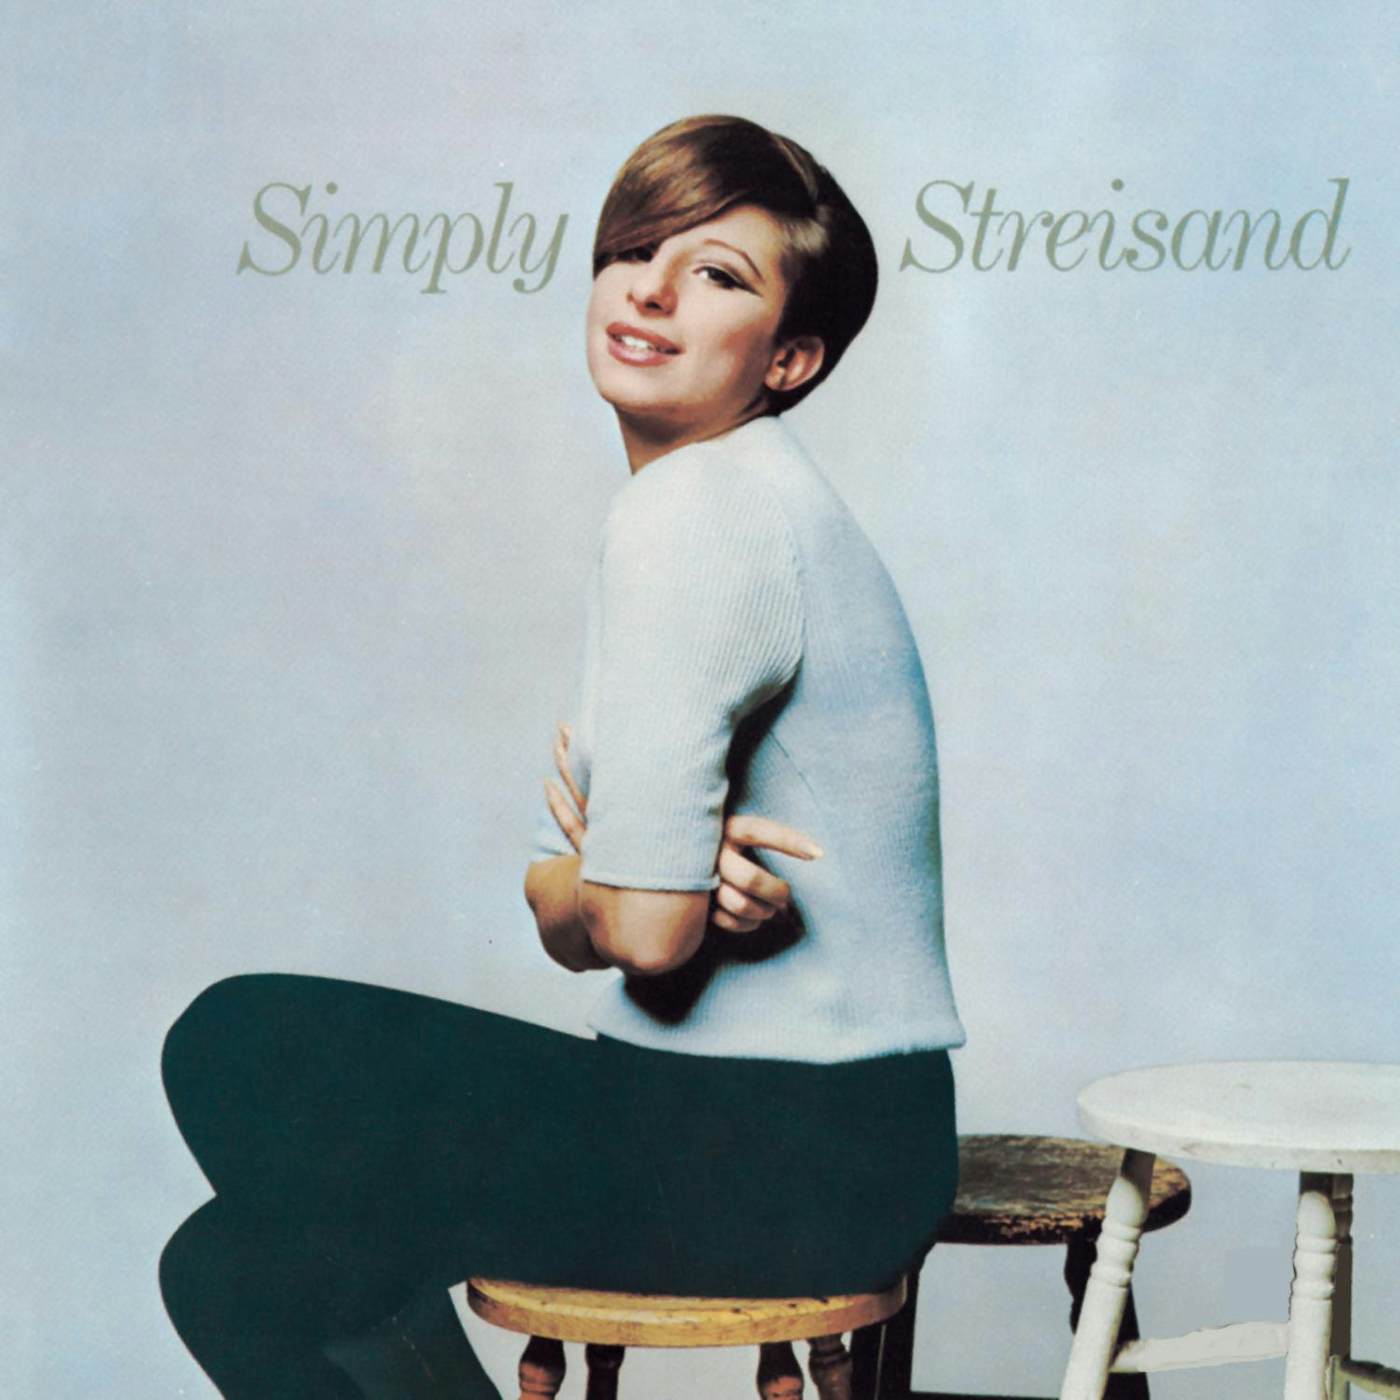 Barbra Streisand SIMPLY STREISAND CD